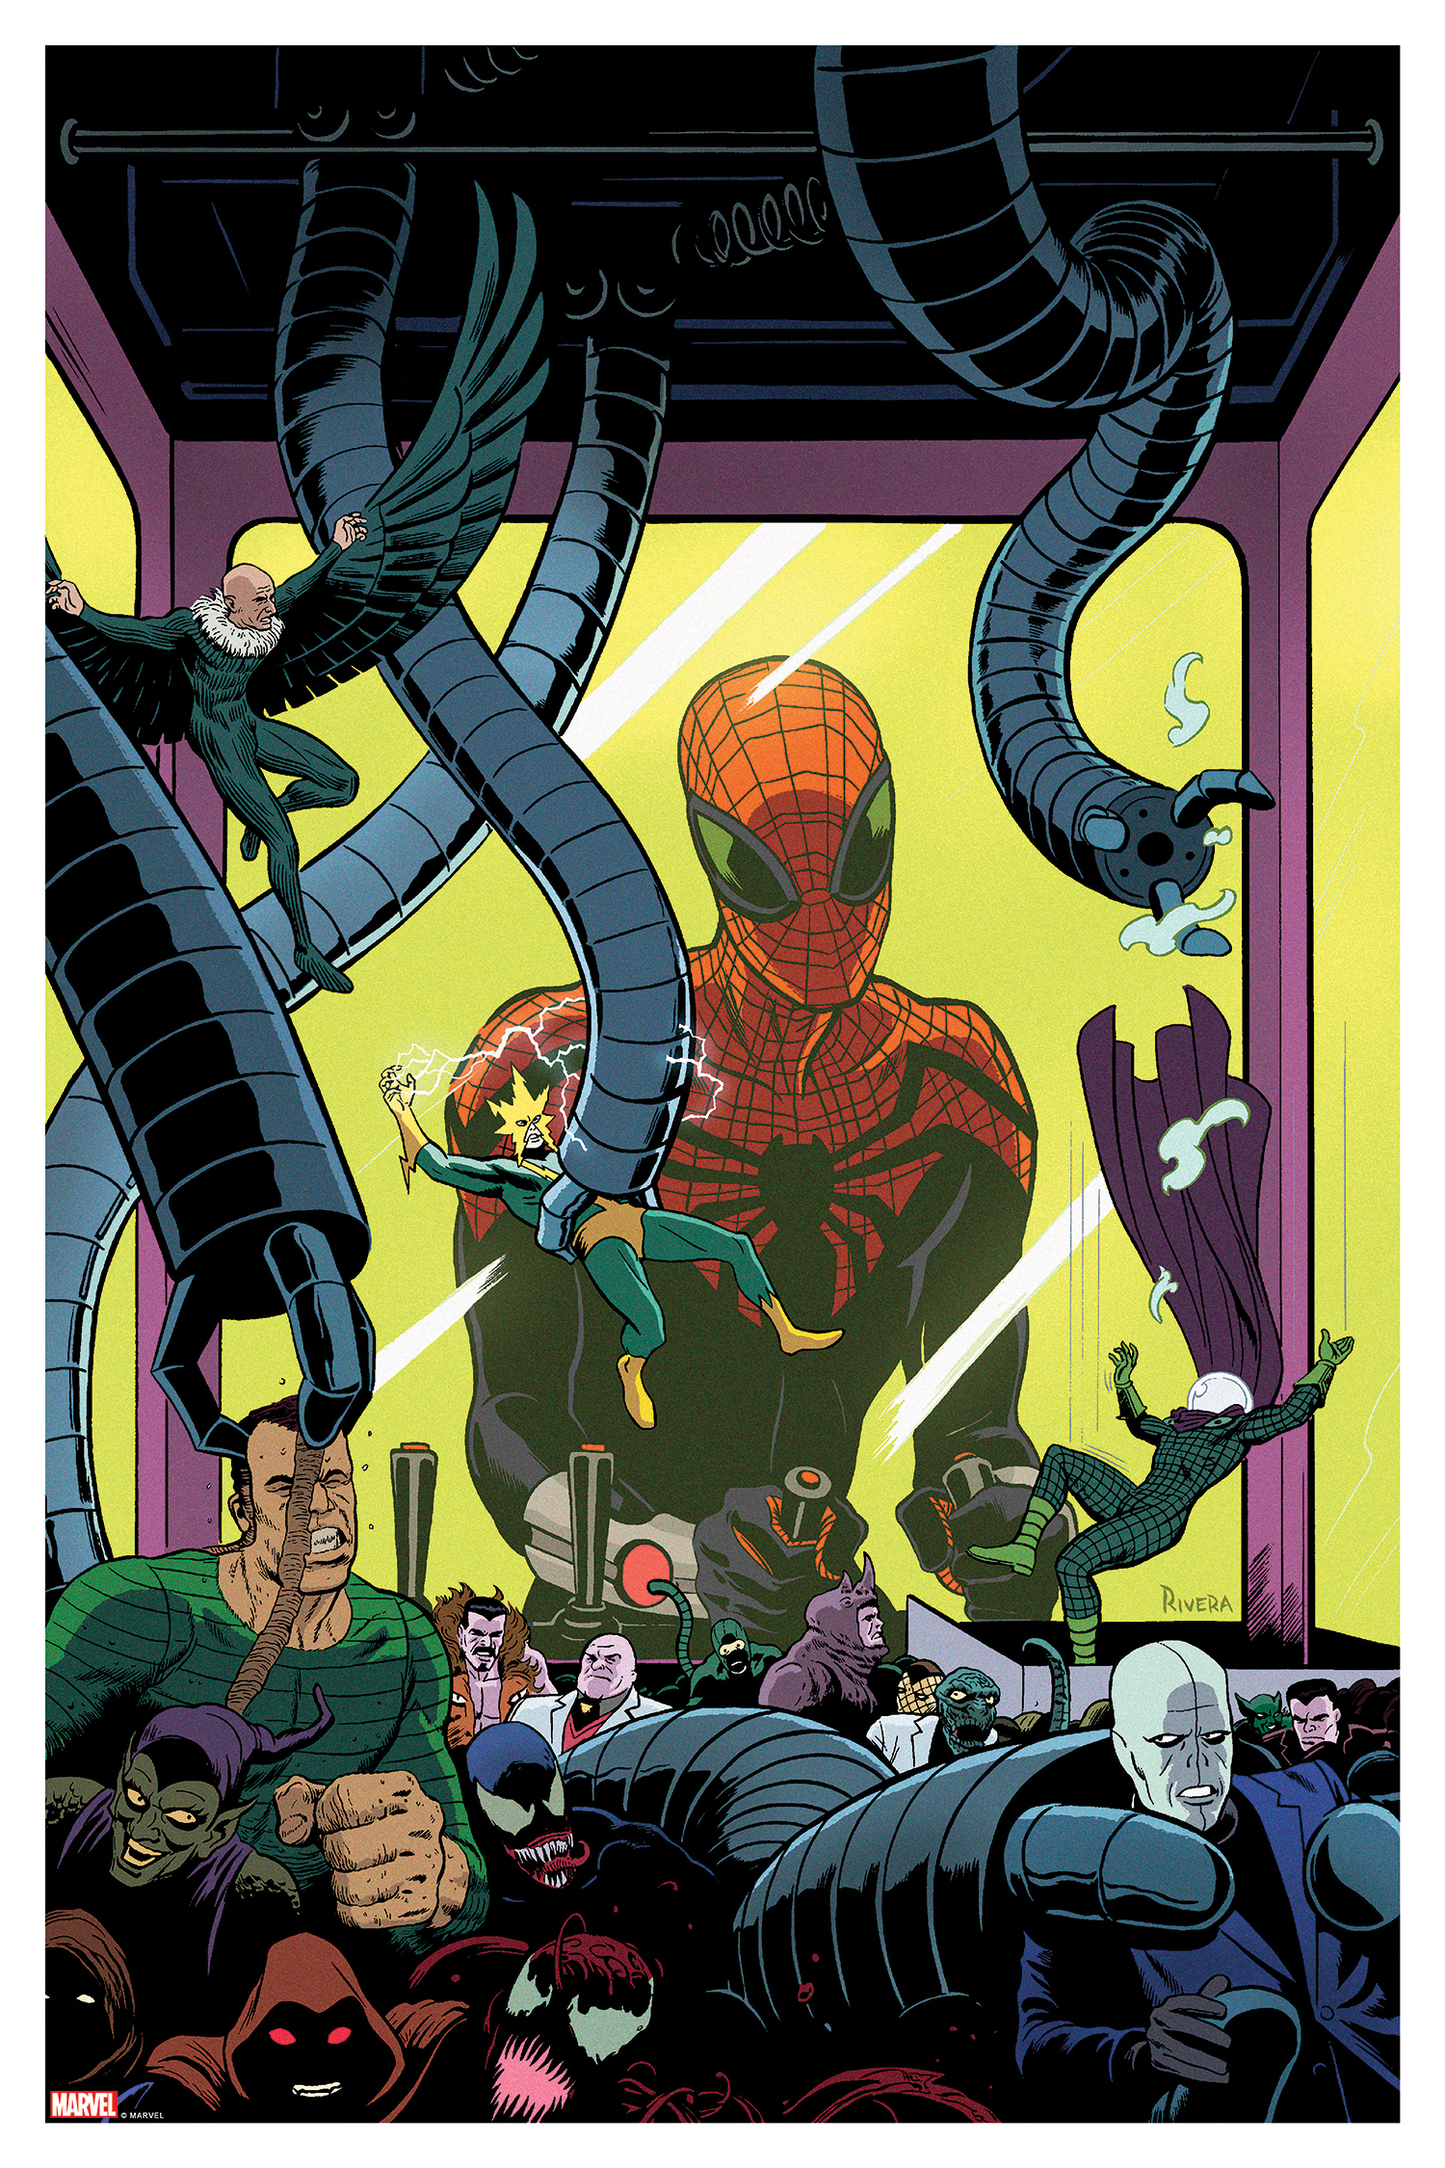 Paolo Rivera "Superior Spider-Man Team Up #5"